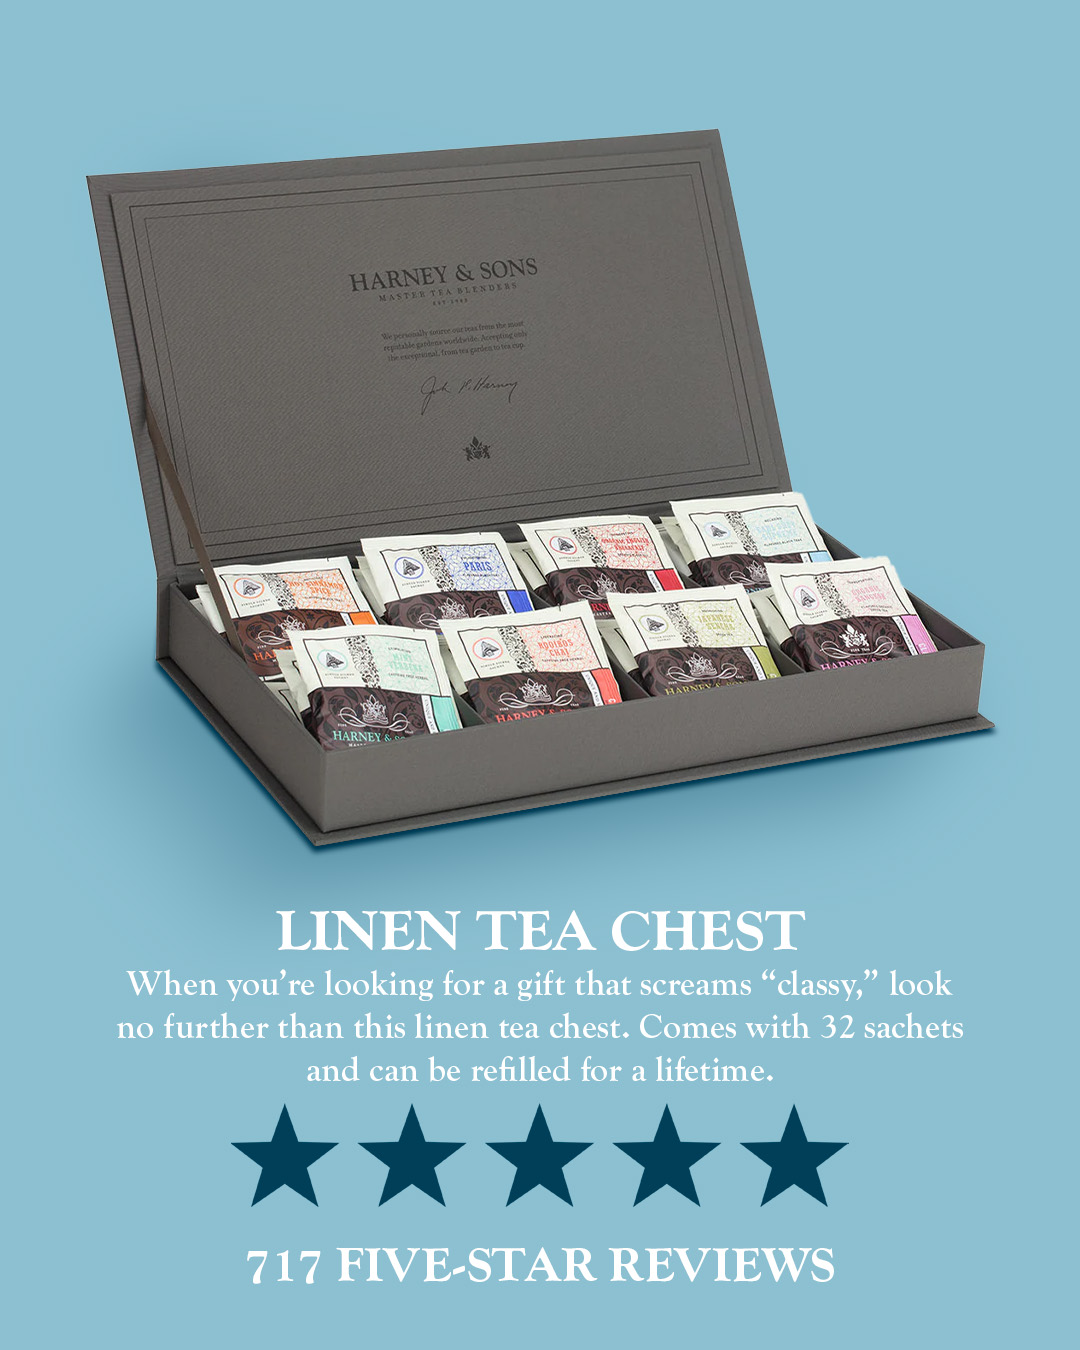 Matcha Gift Set  A Perfect Tea Gift - Harney & Sons Fine Teas